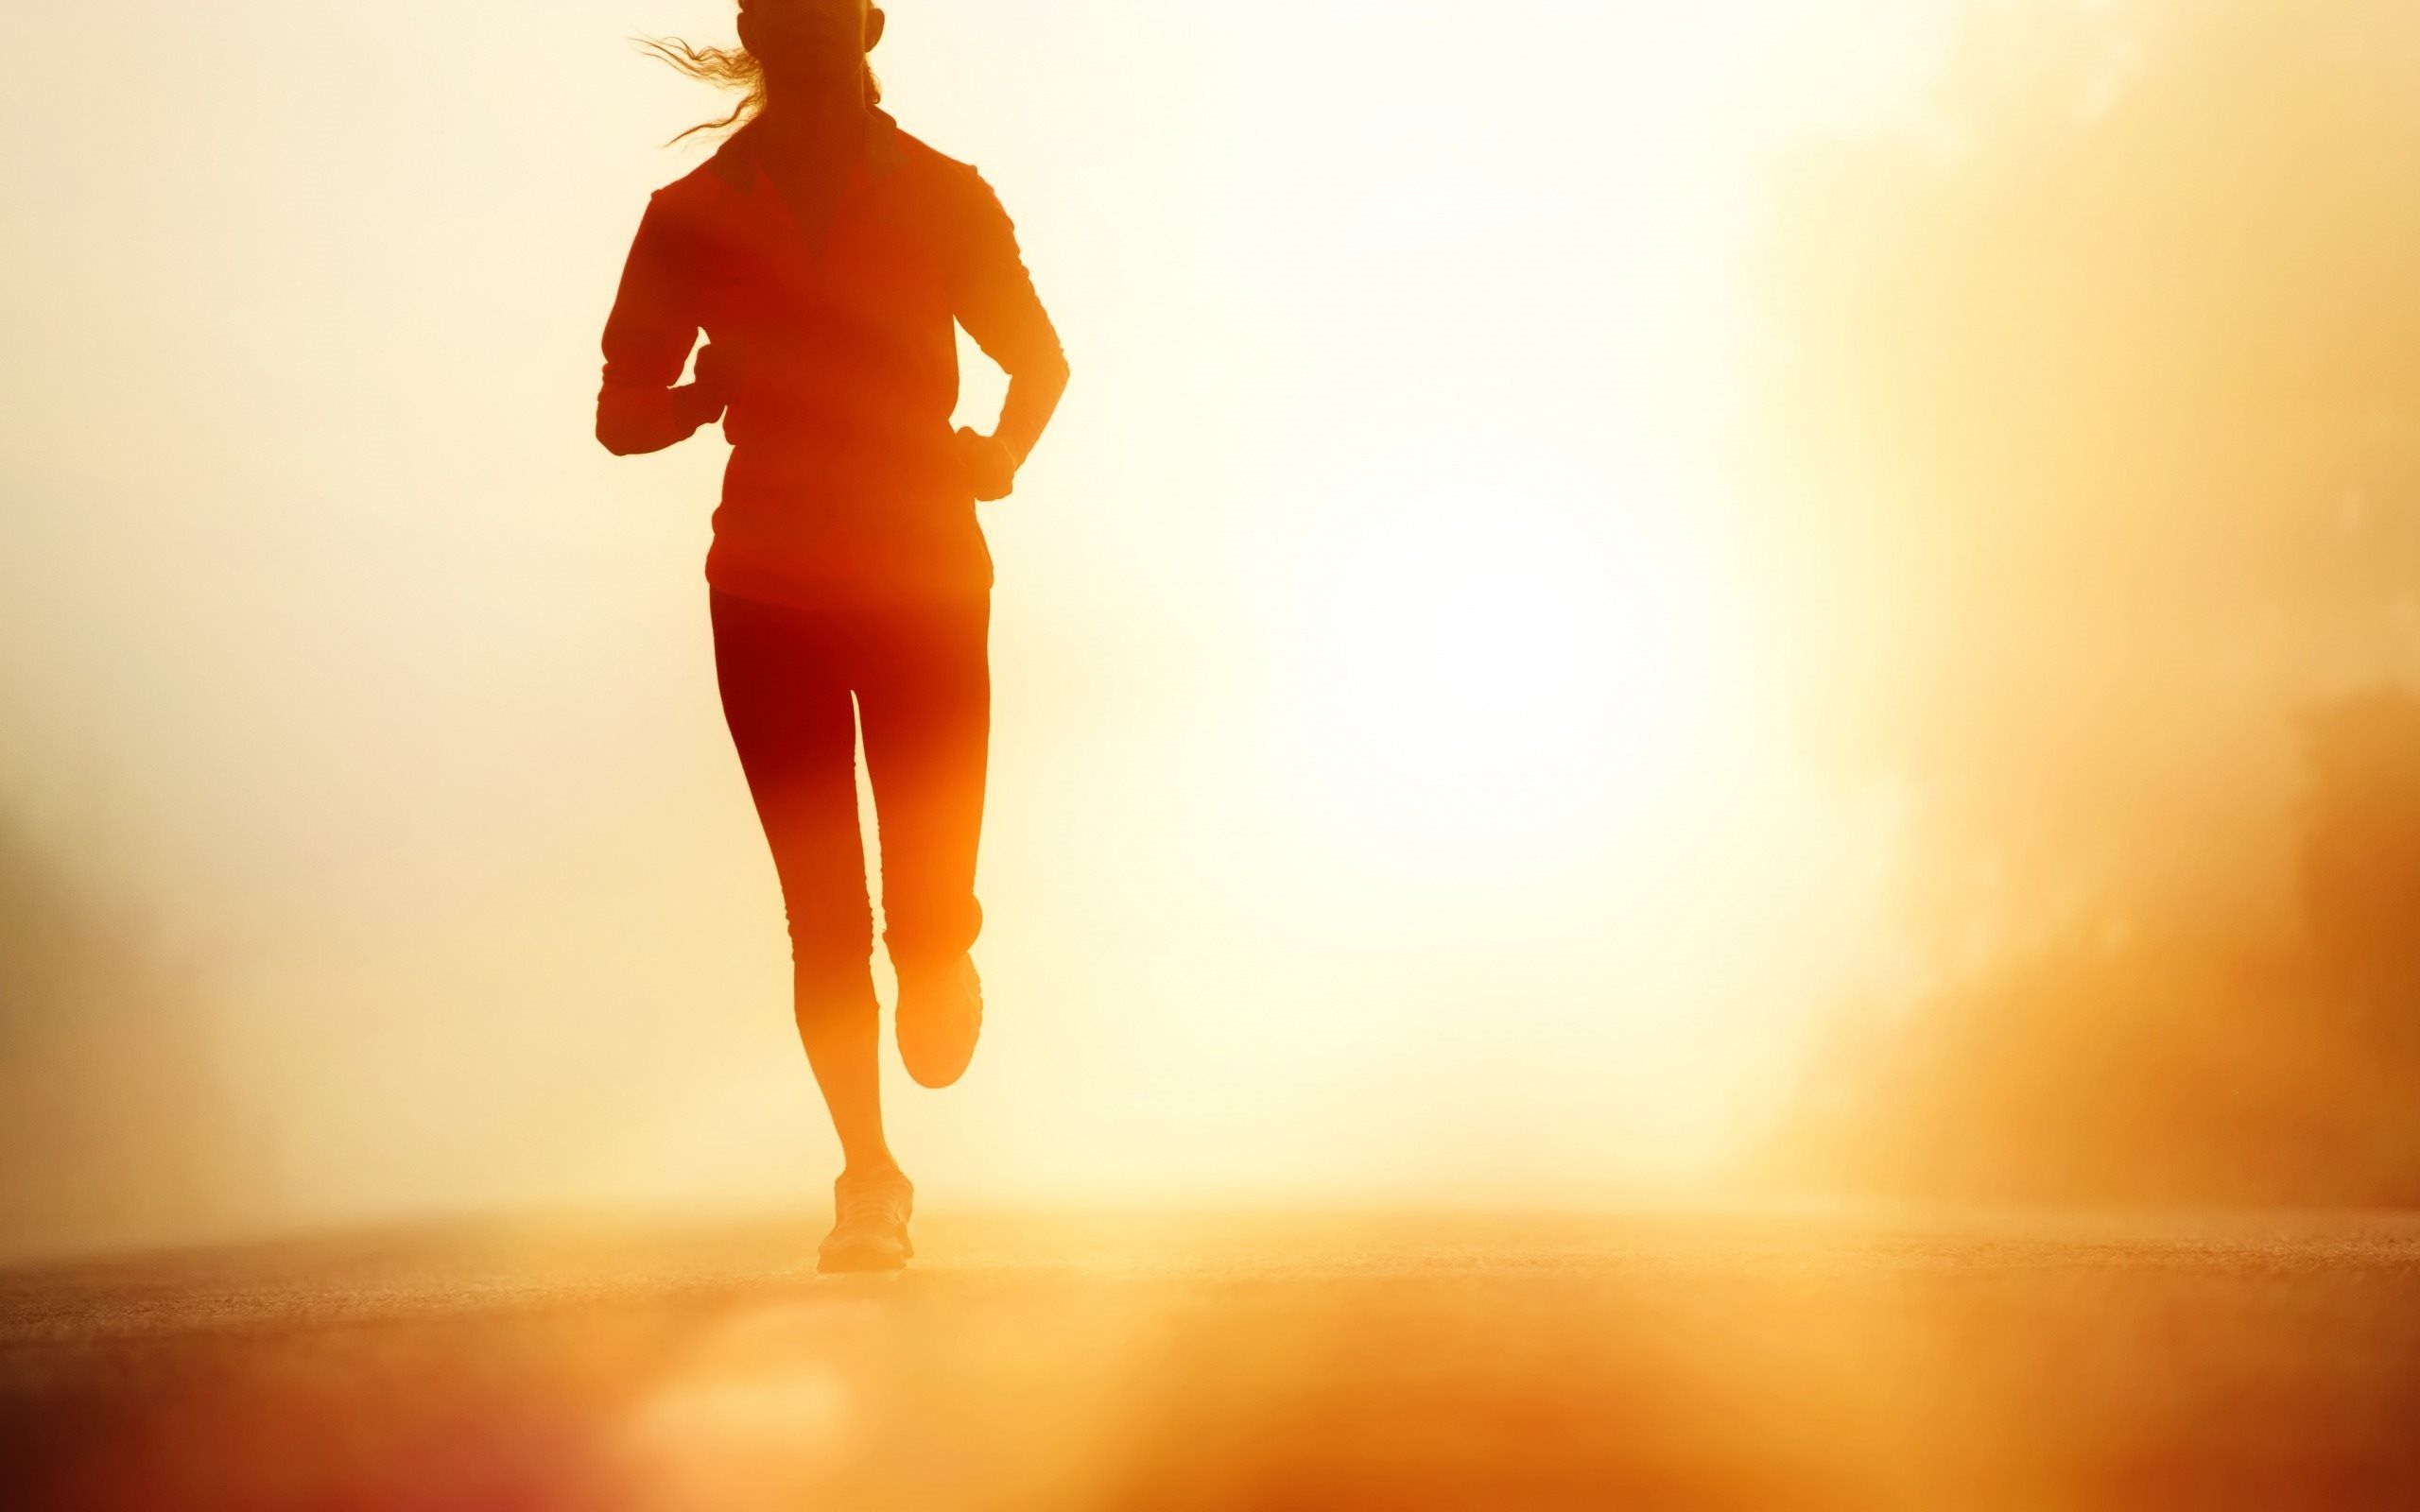 Download wallpaper jogging, athlete, morning, run, runner